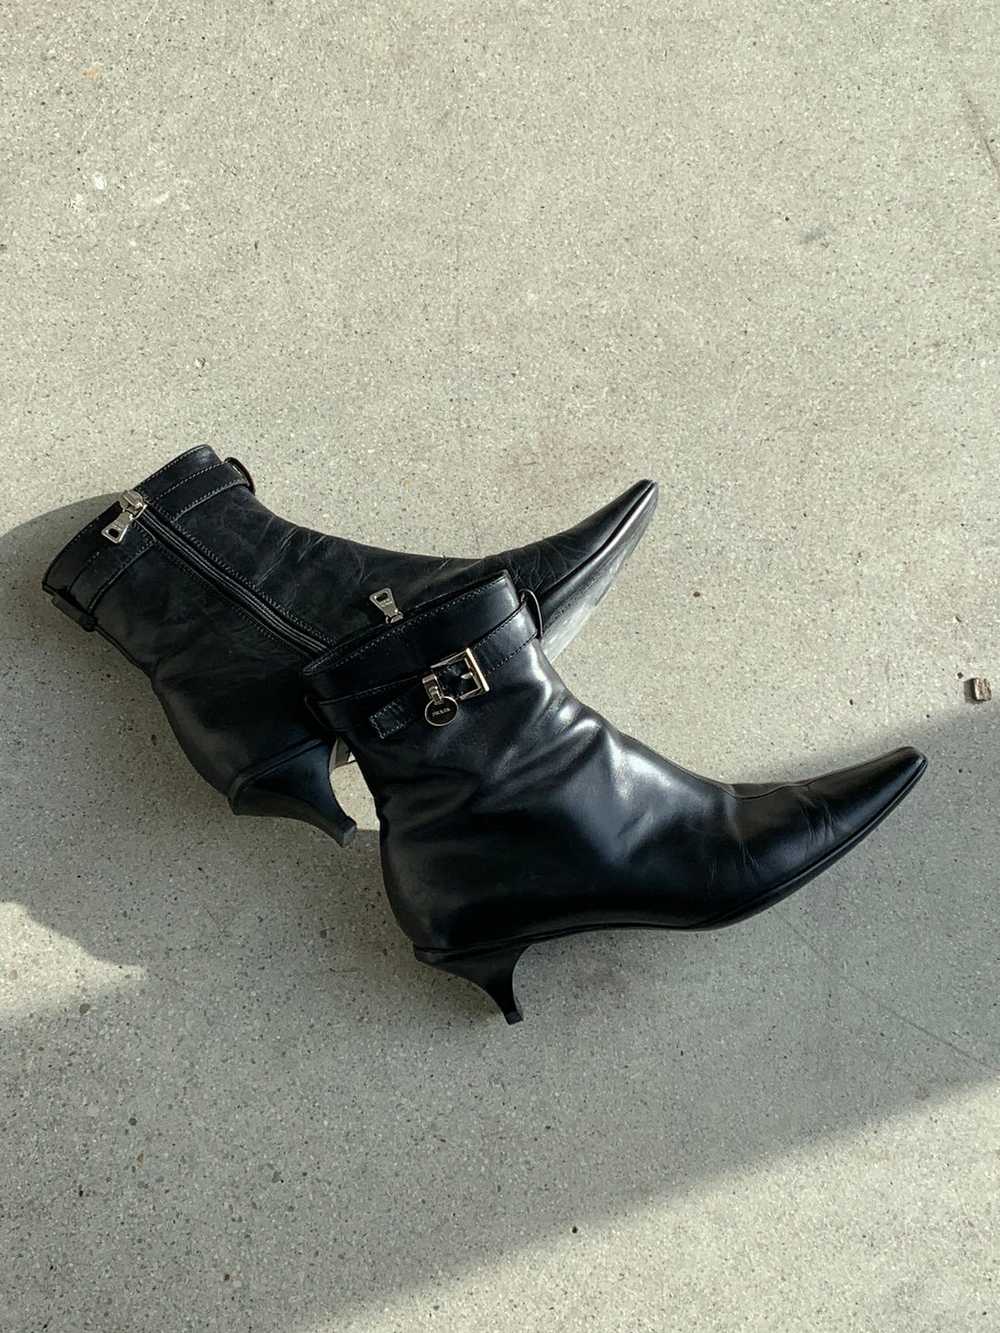 Prada ankle boots - image 8